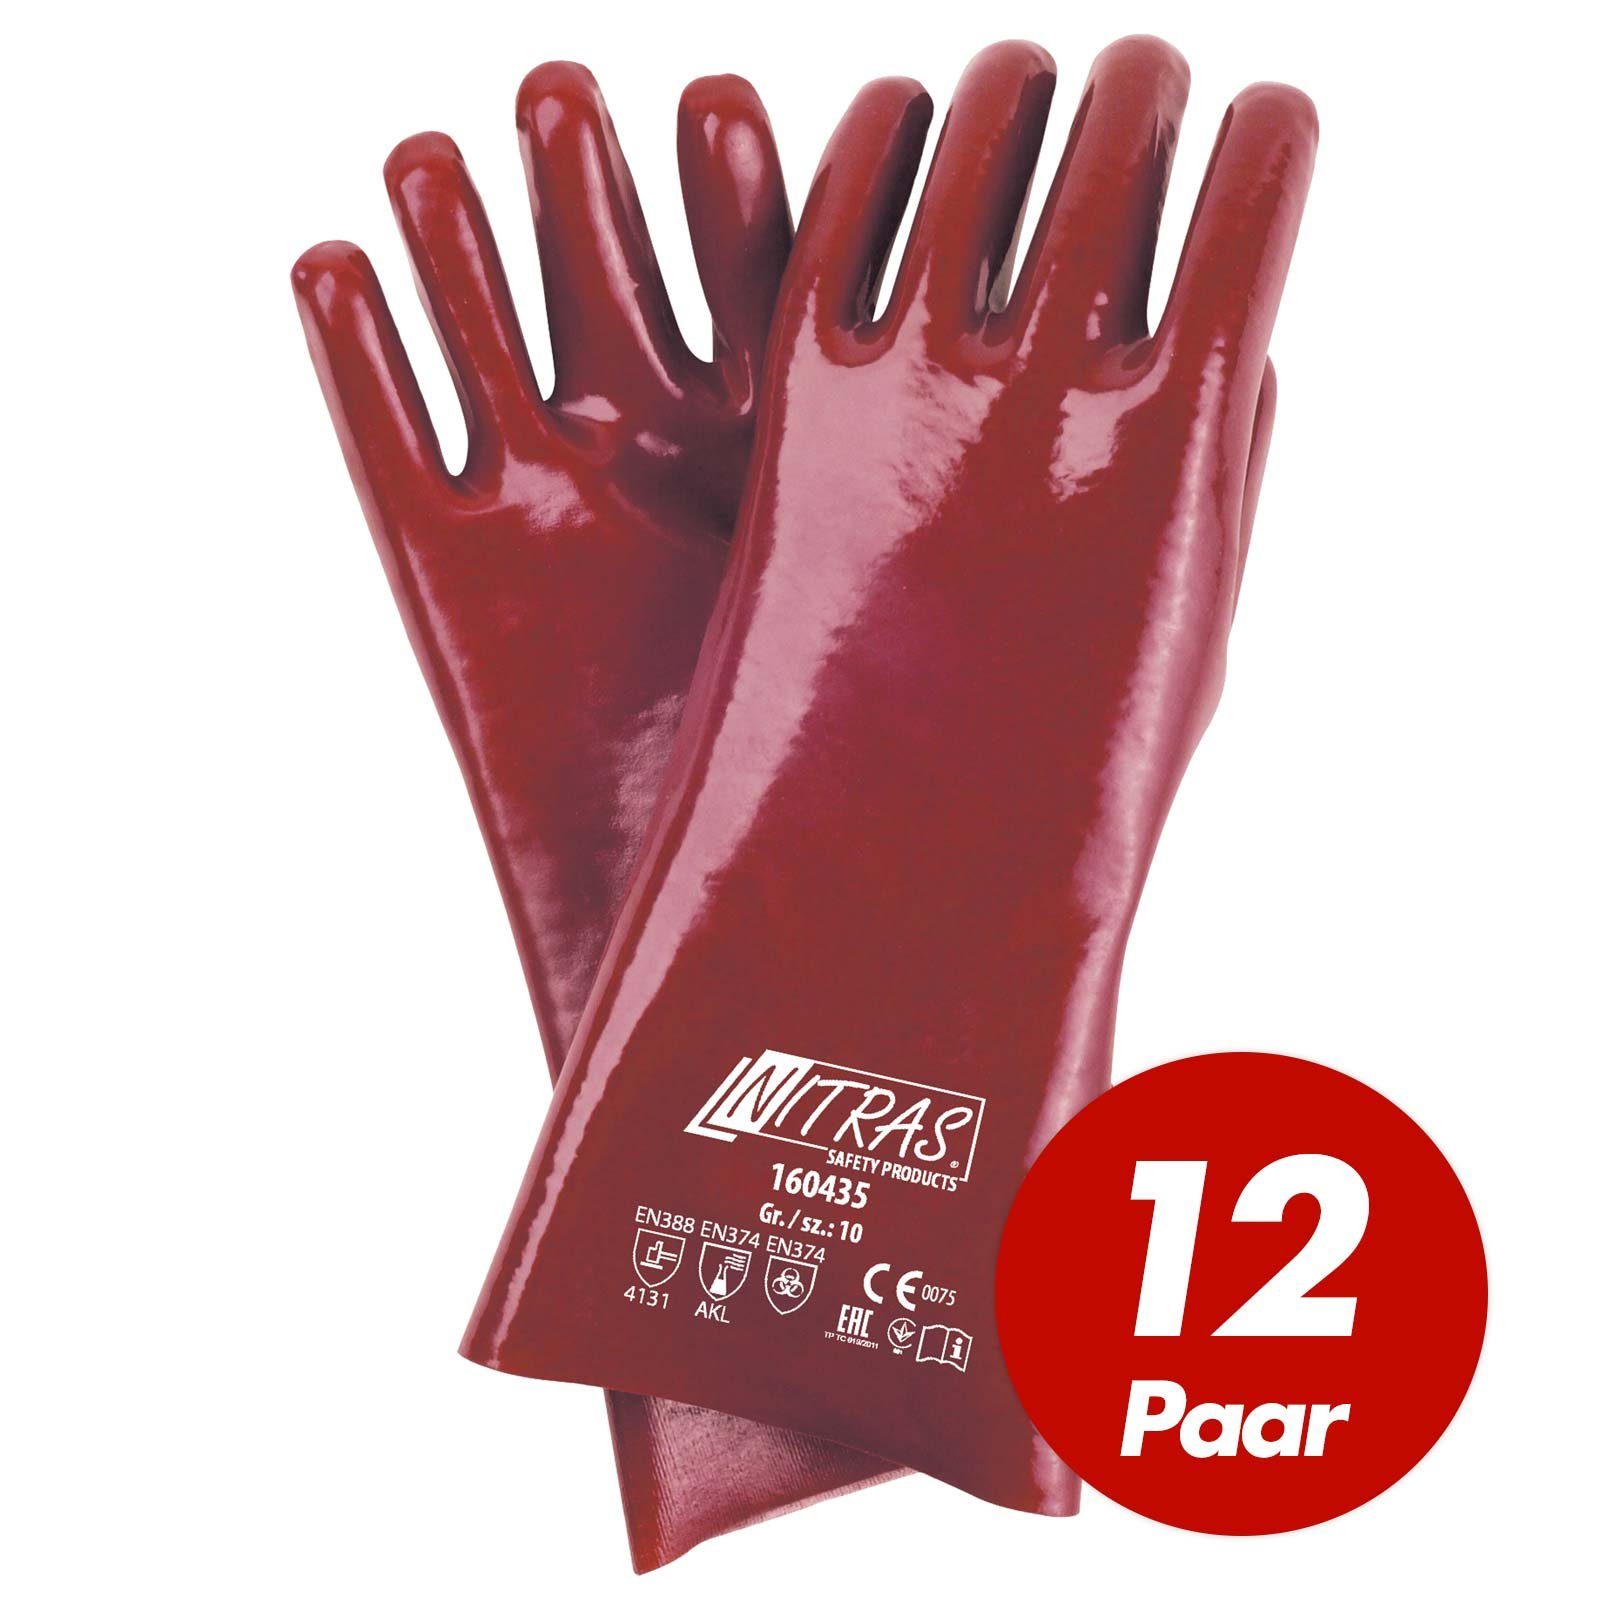 Nitras Putzhandschuh NITRAS PVC-Handschuhe vollbeschichtete 12 160435 Paar - Handschuhe (Set)